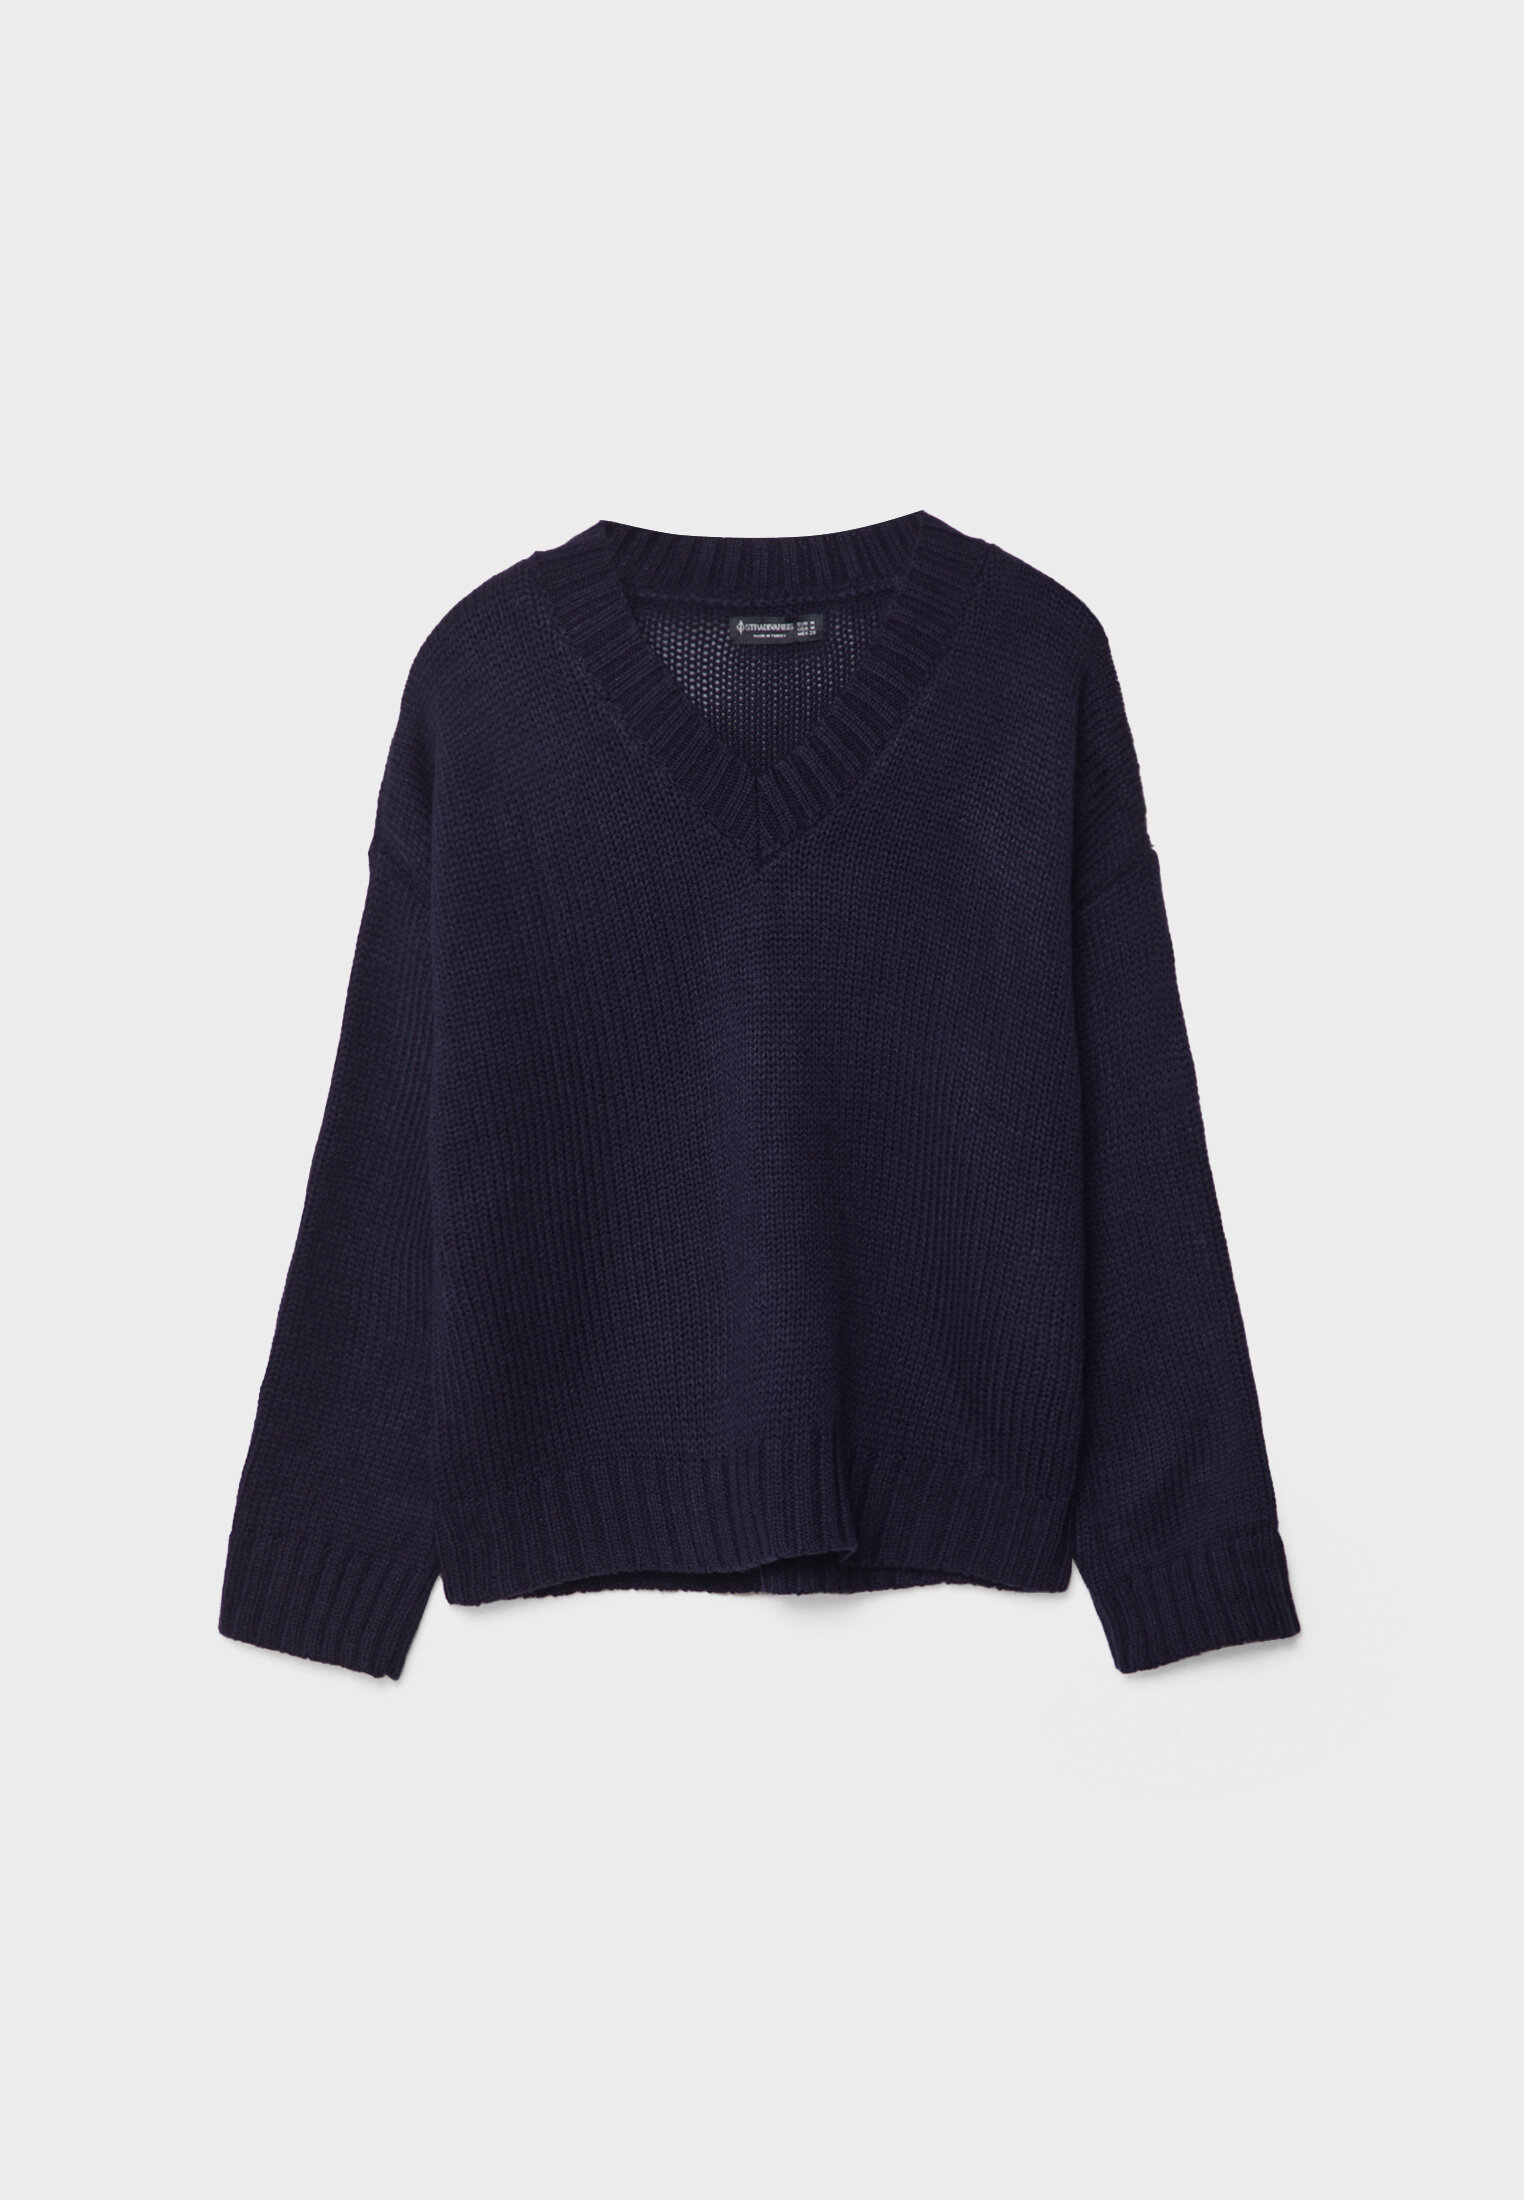 V-neck knit sweater - Women's fashion | Stradivarius United Kingdom